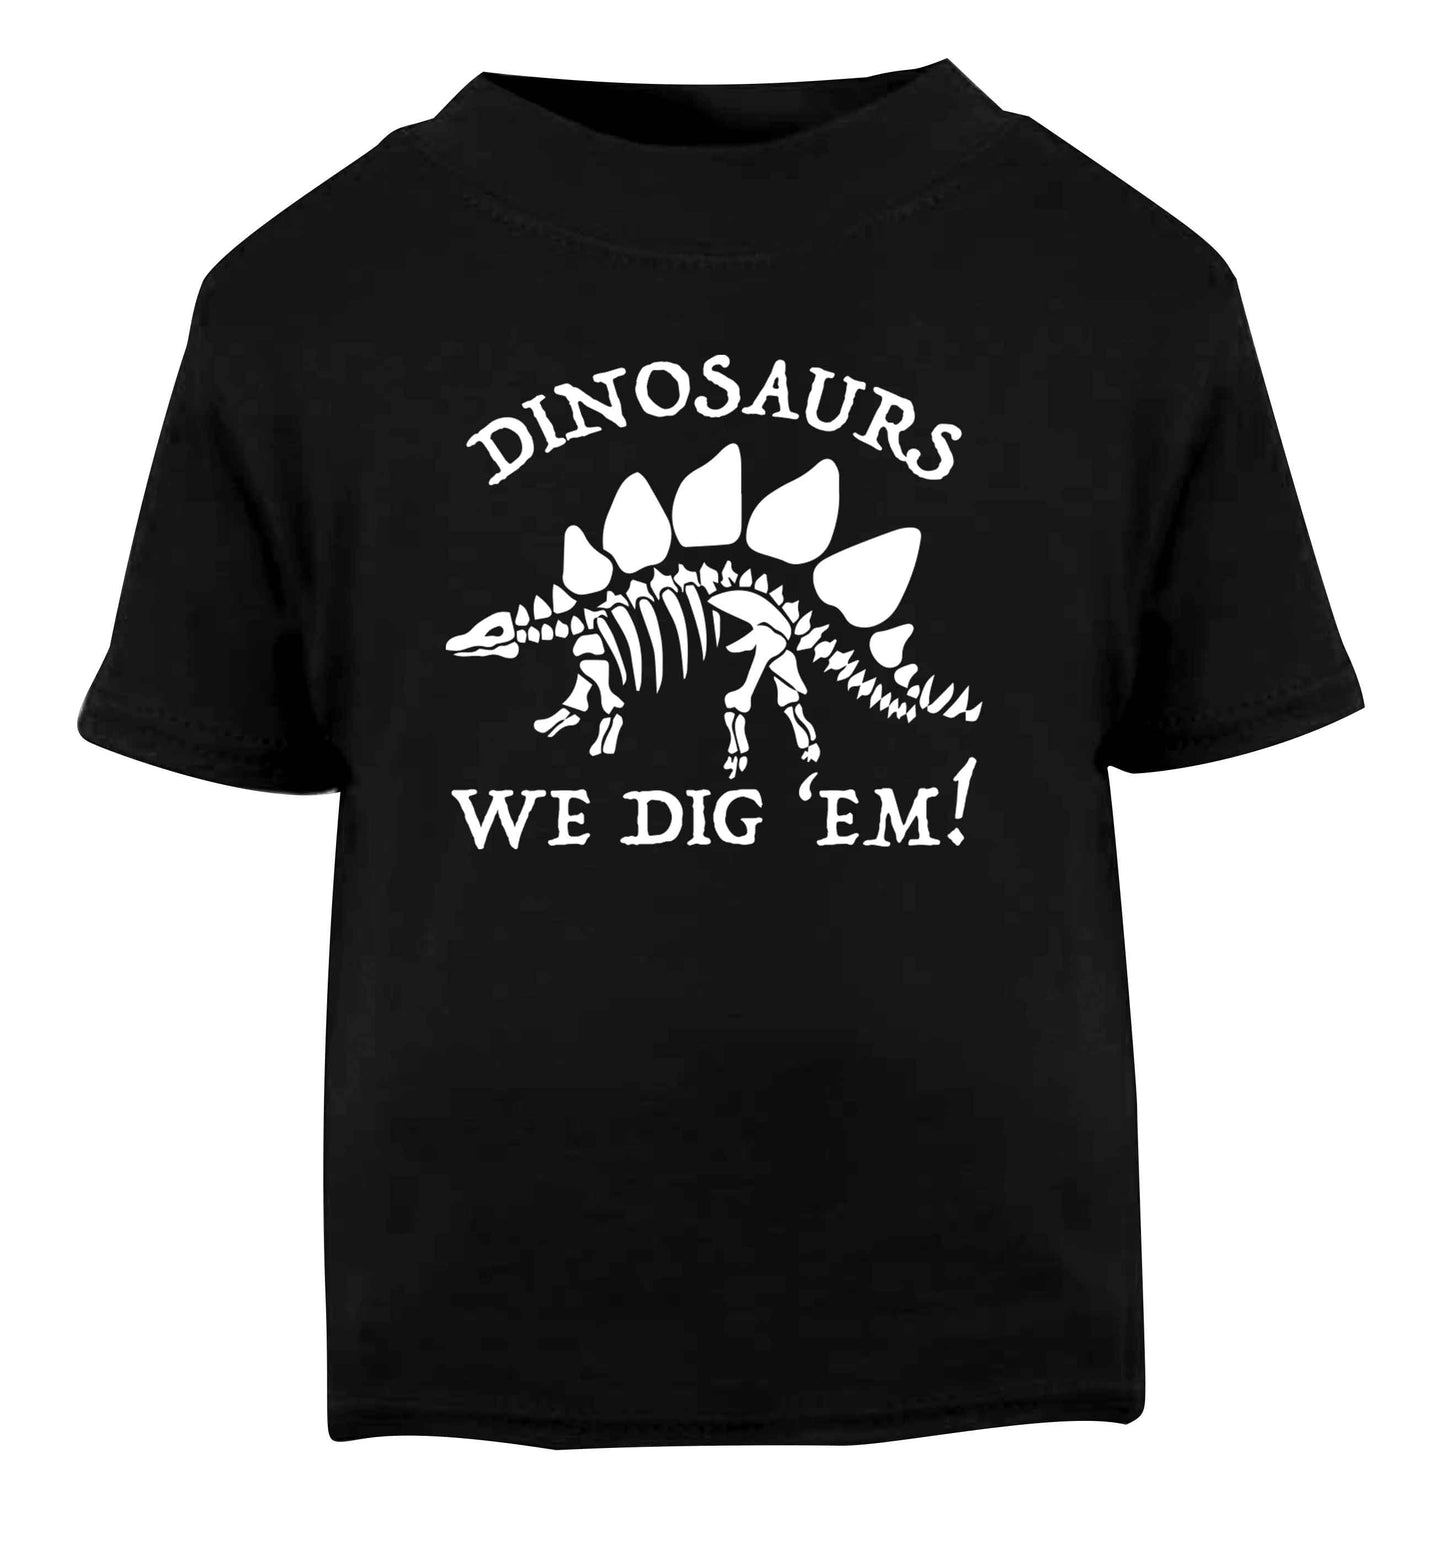 Dinosaurs we dig 'em! Black Baby Toddler Tshirt 2 years